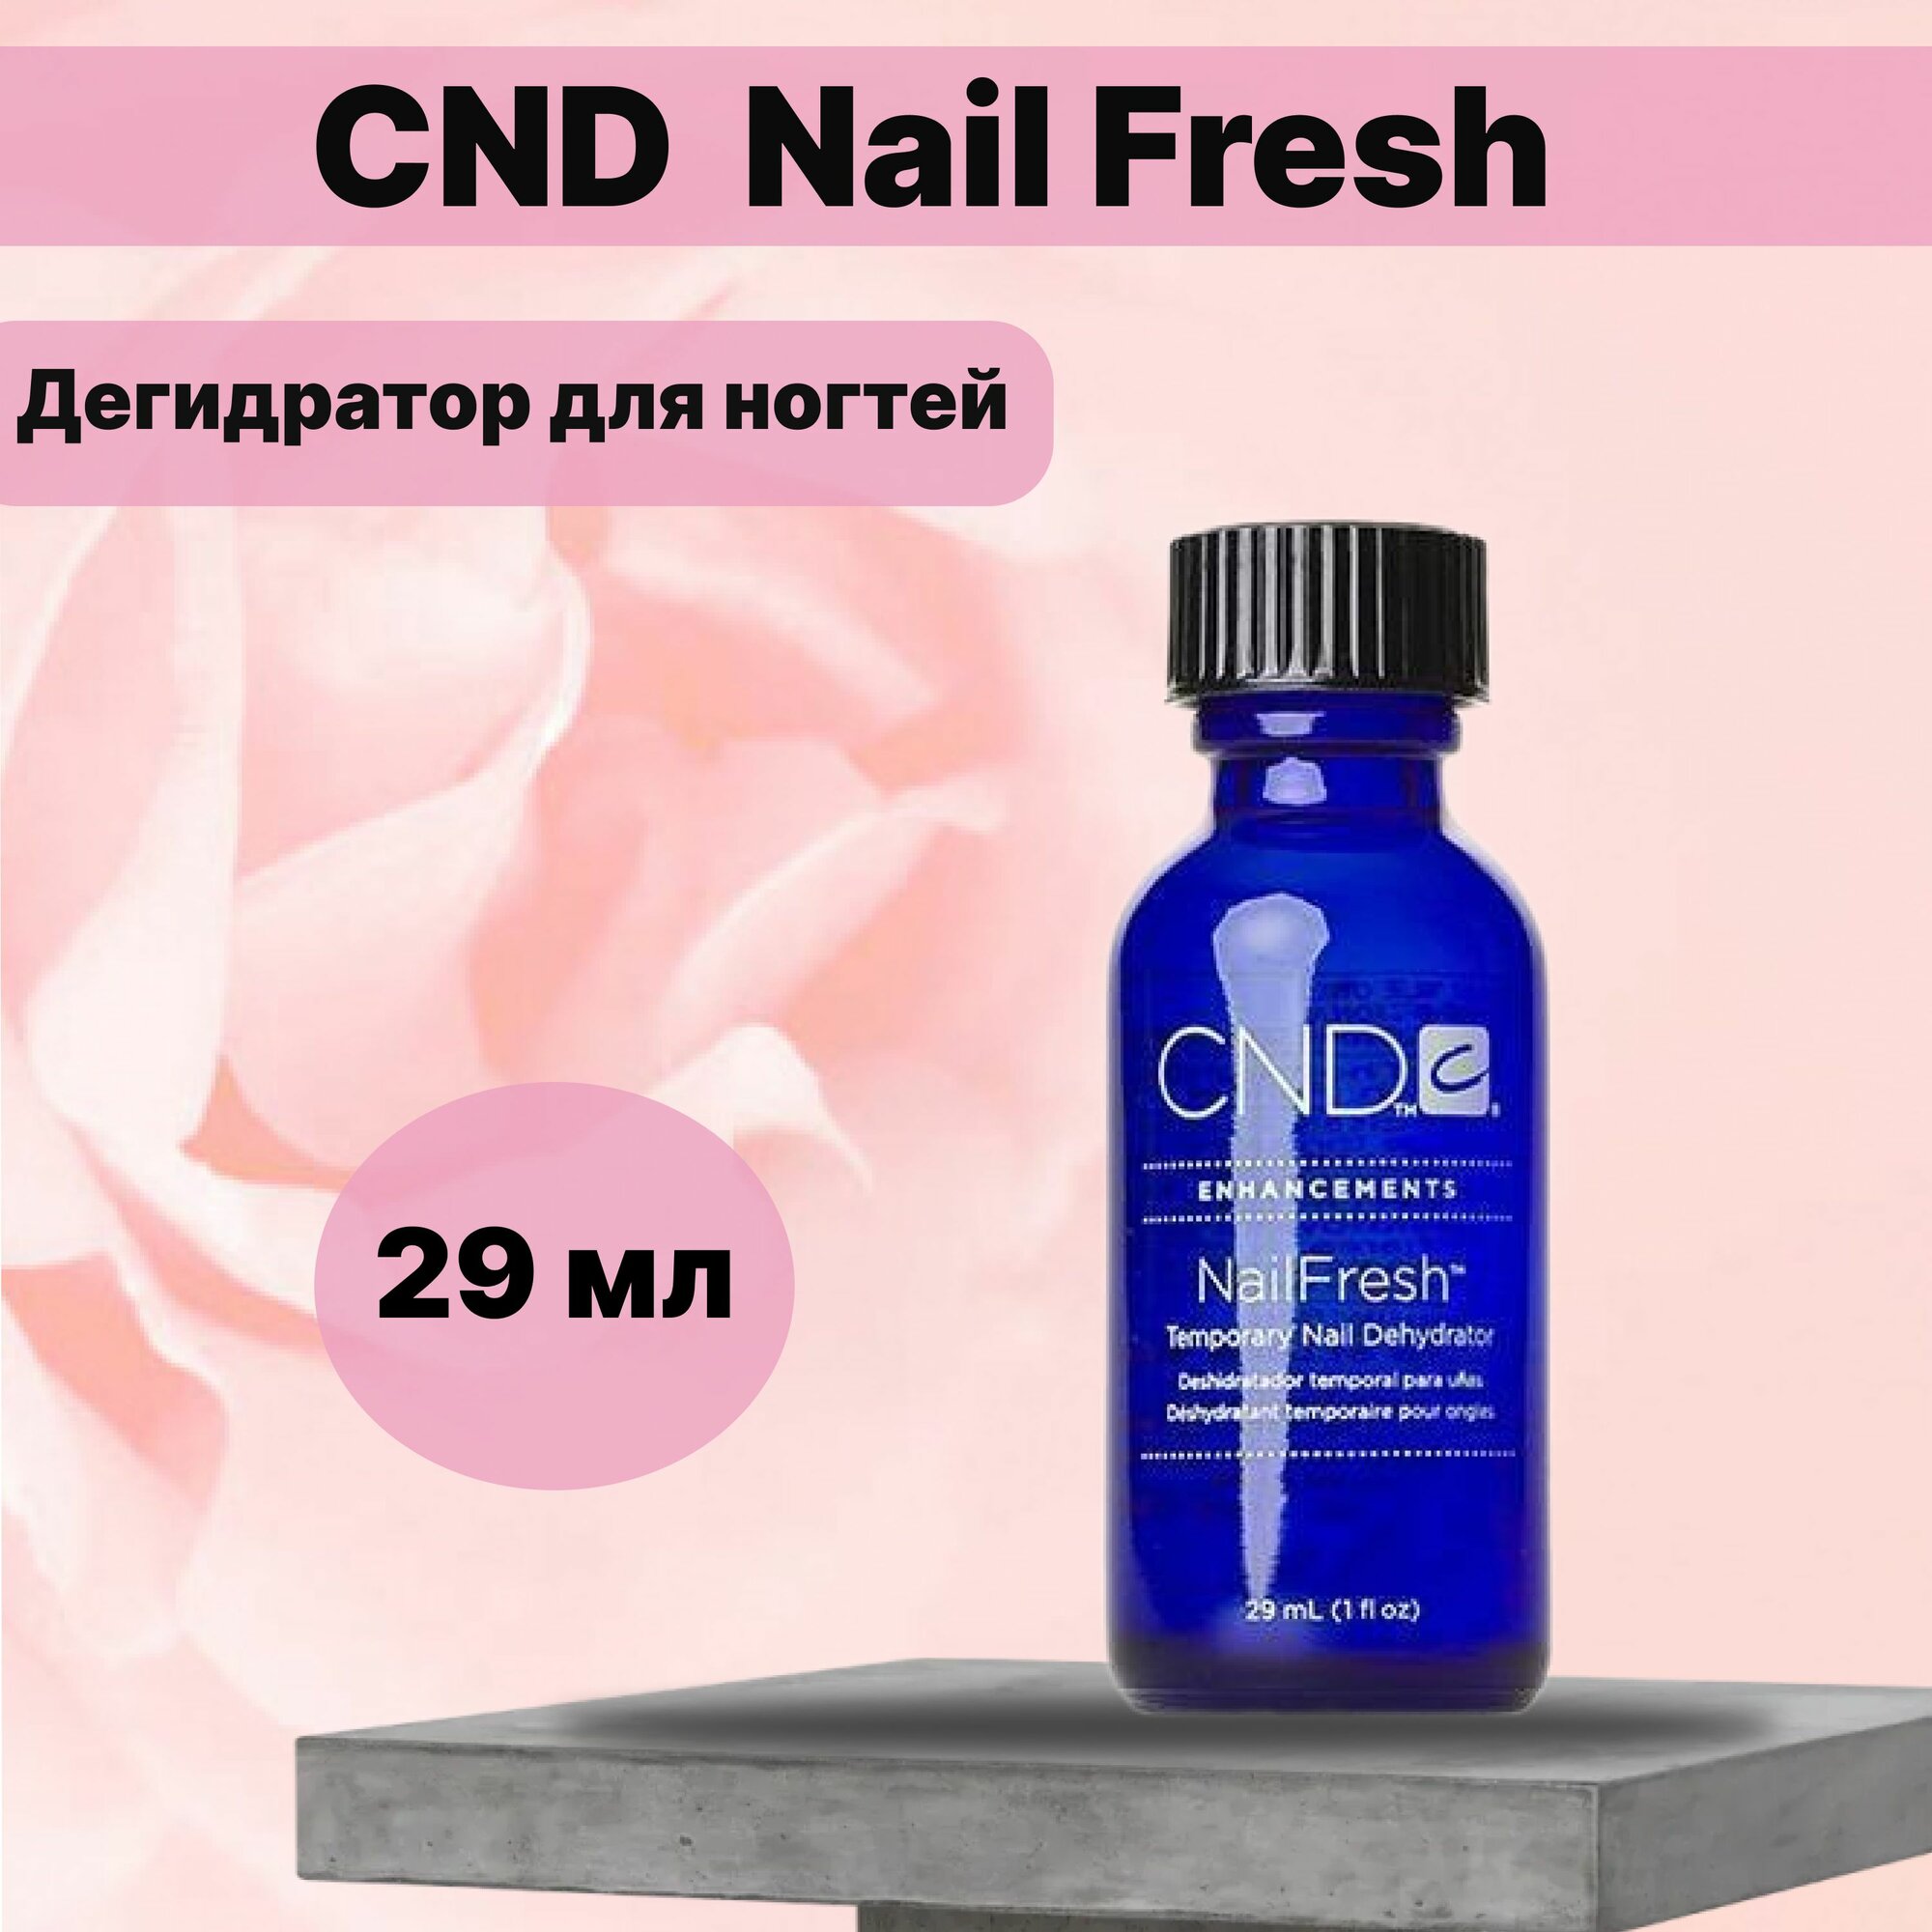 Дегидратор CND Nail Fresh